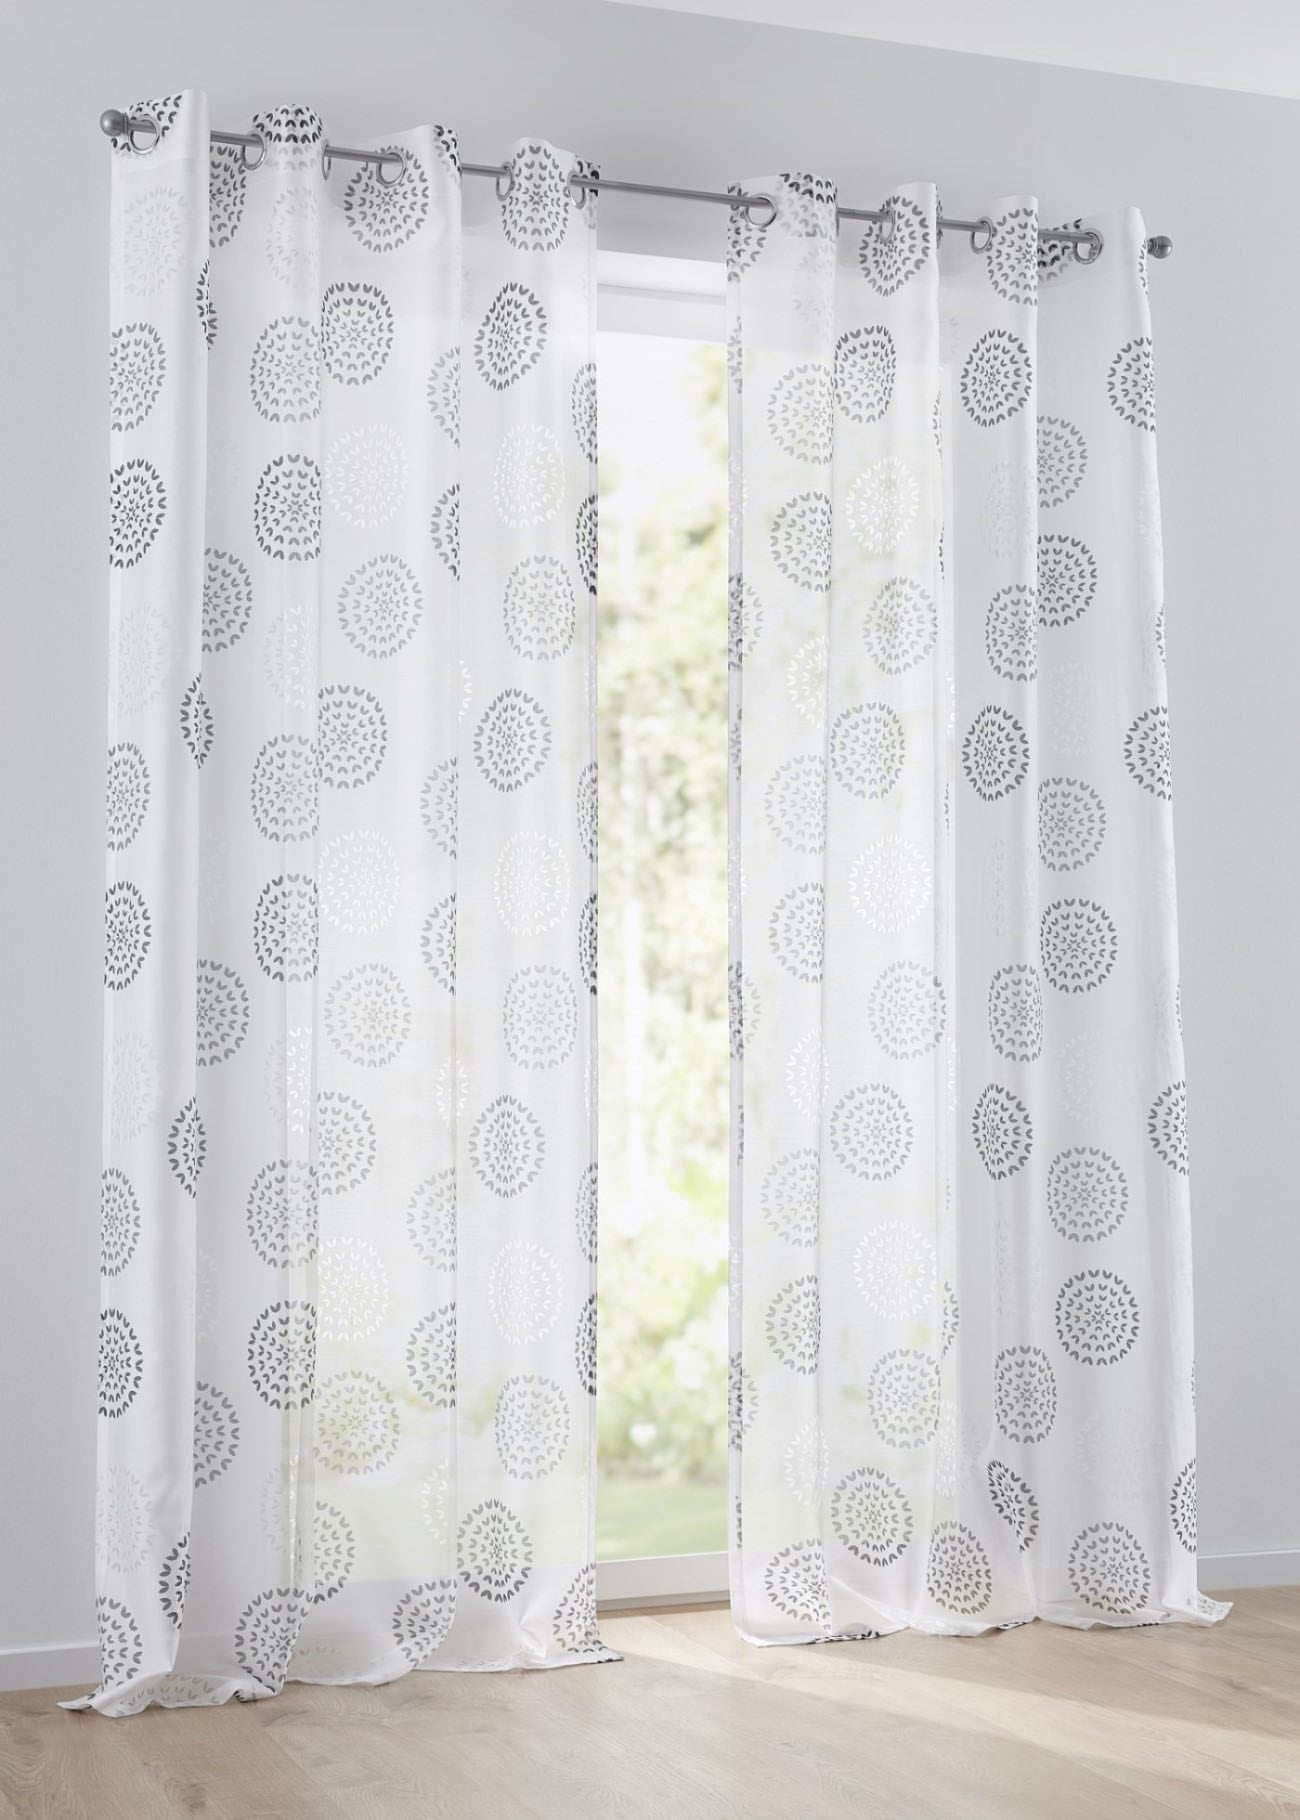 Kutti Vorhang »Bella«, (1 Trouver sur halbtransparent, Ausbrenner, Baumwolle-Polyester St.), Gardine, bedruckt